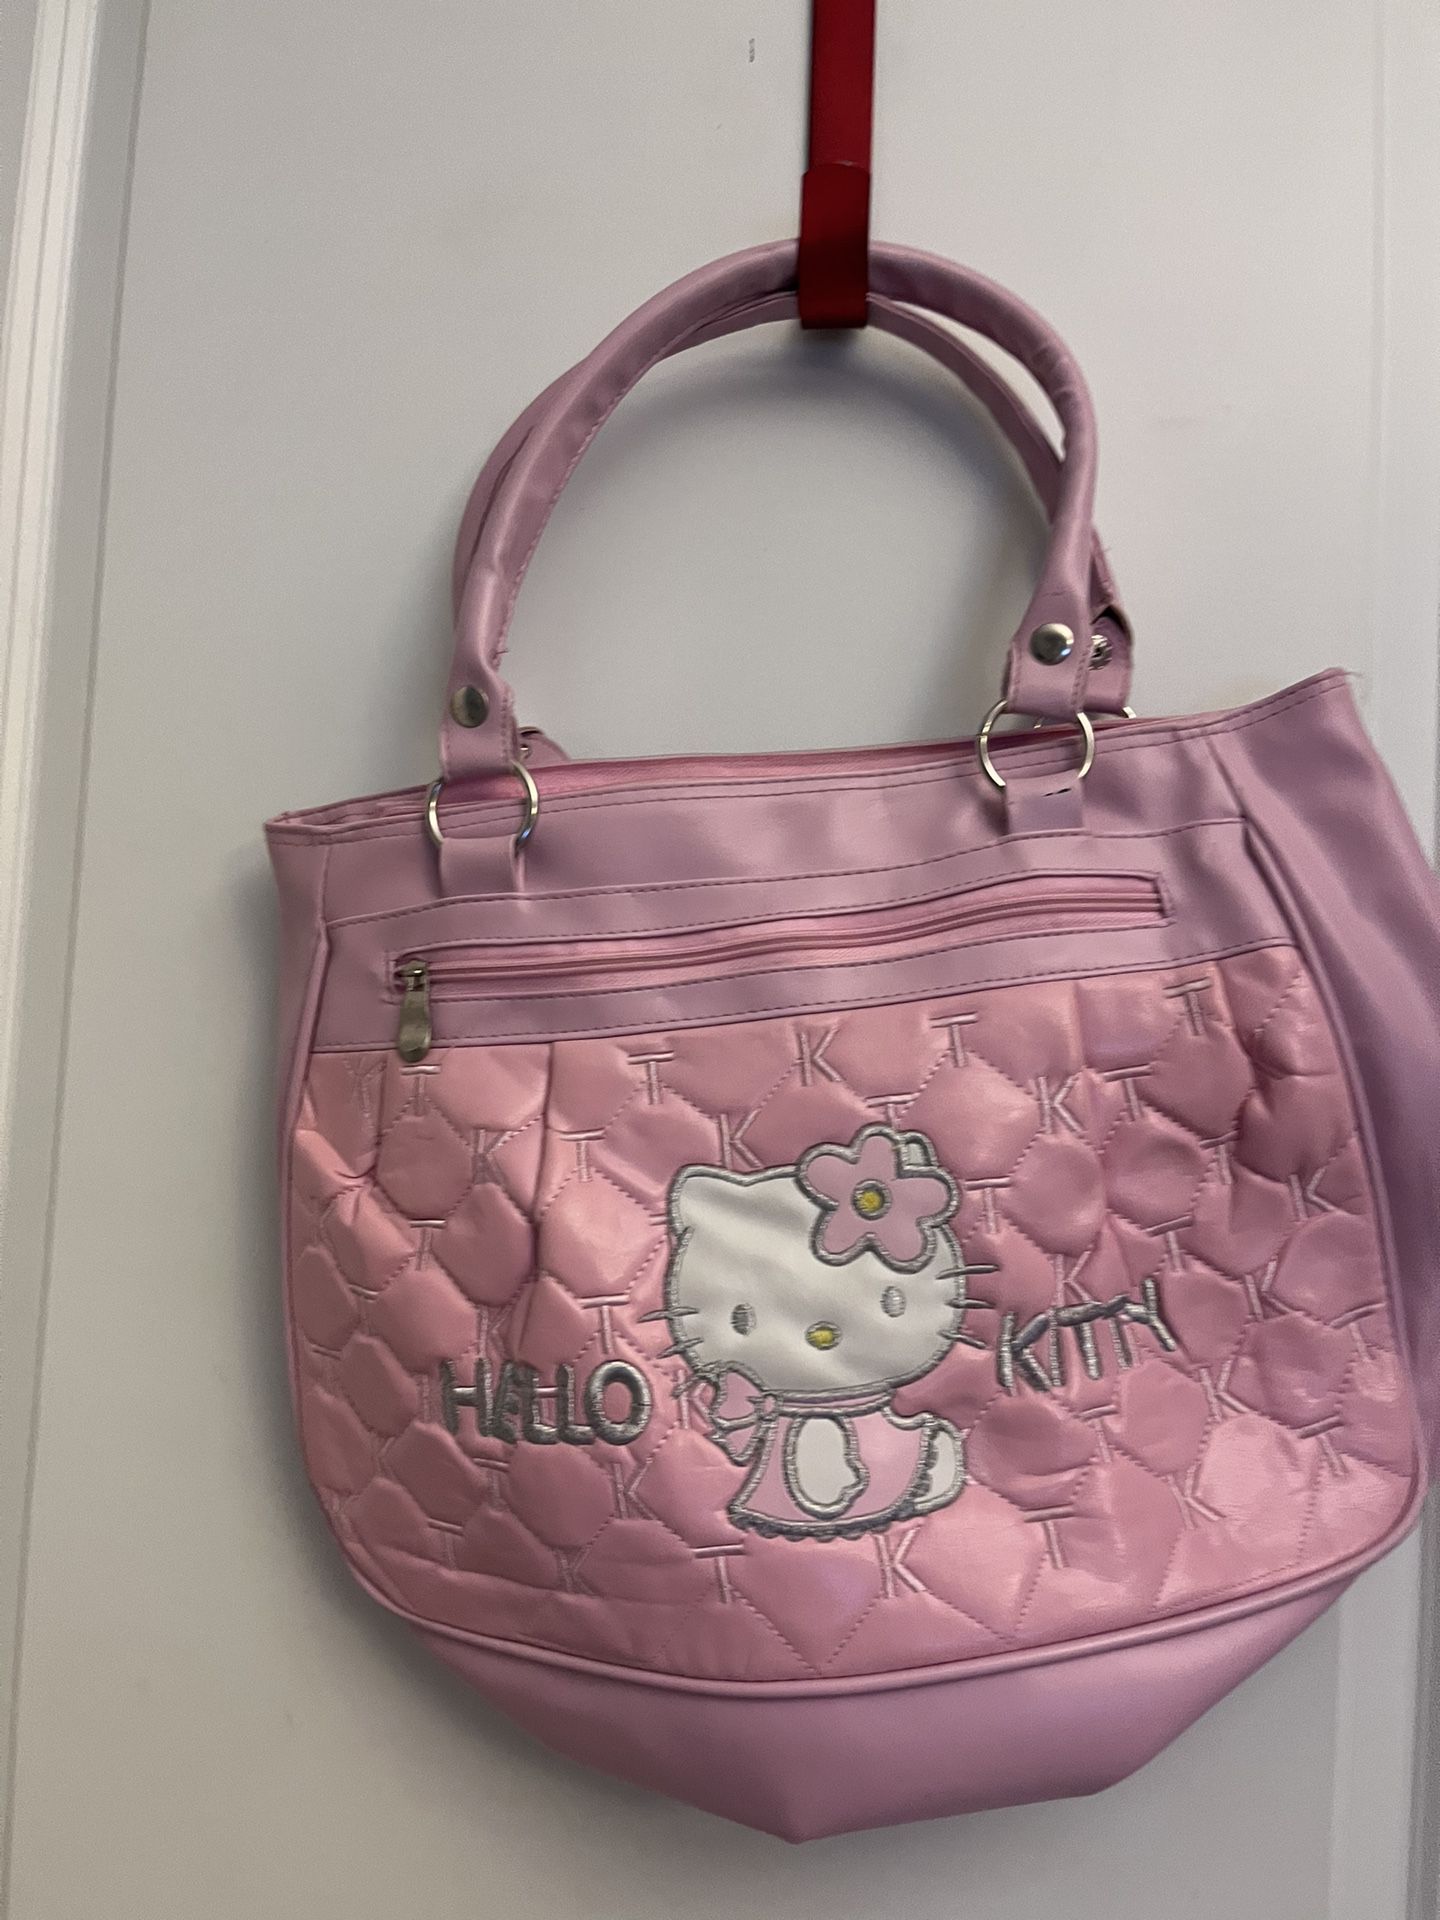 2 Hello Kitty Bags